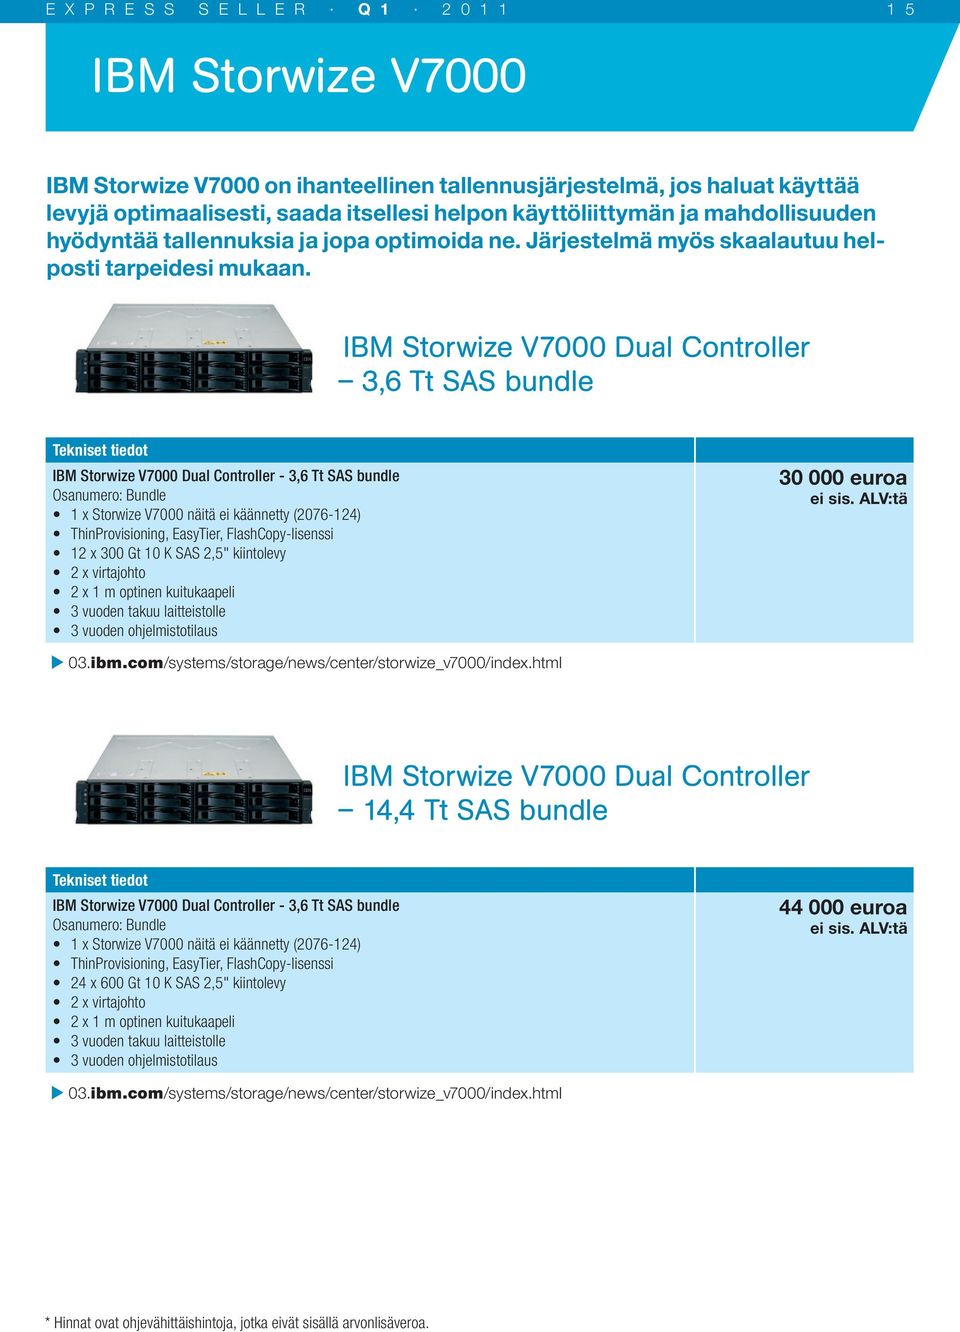 IBM Storwize V7000 Dual Controller 3,6 Tt SAS bundle Tekniset tiedot IBM Storwize V7000 Dual Controller - 3,6 Tt SAS bundle Osanumero: Bundle 1 x Storwize V7000 näitä ei käännetty (2076-124)